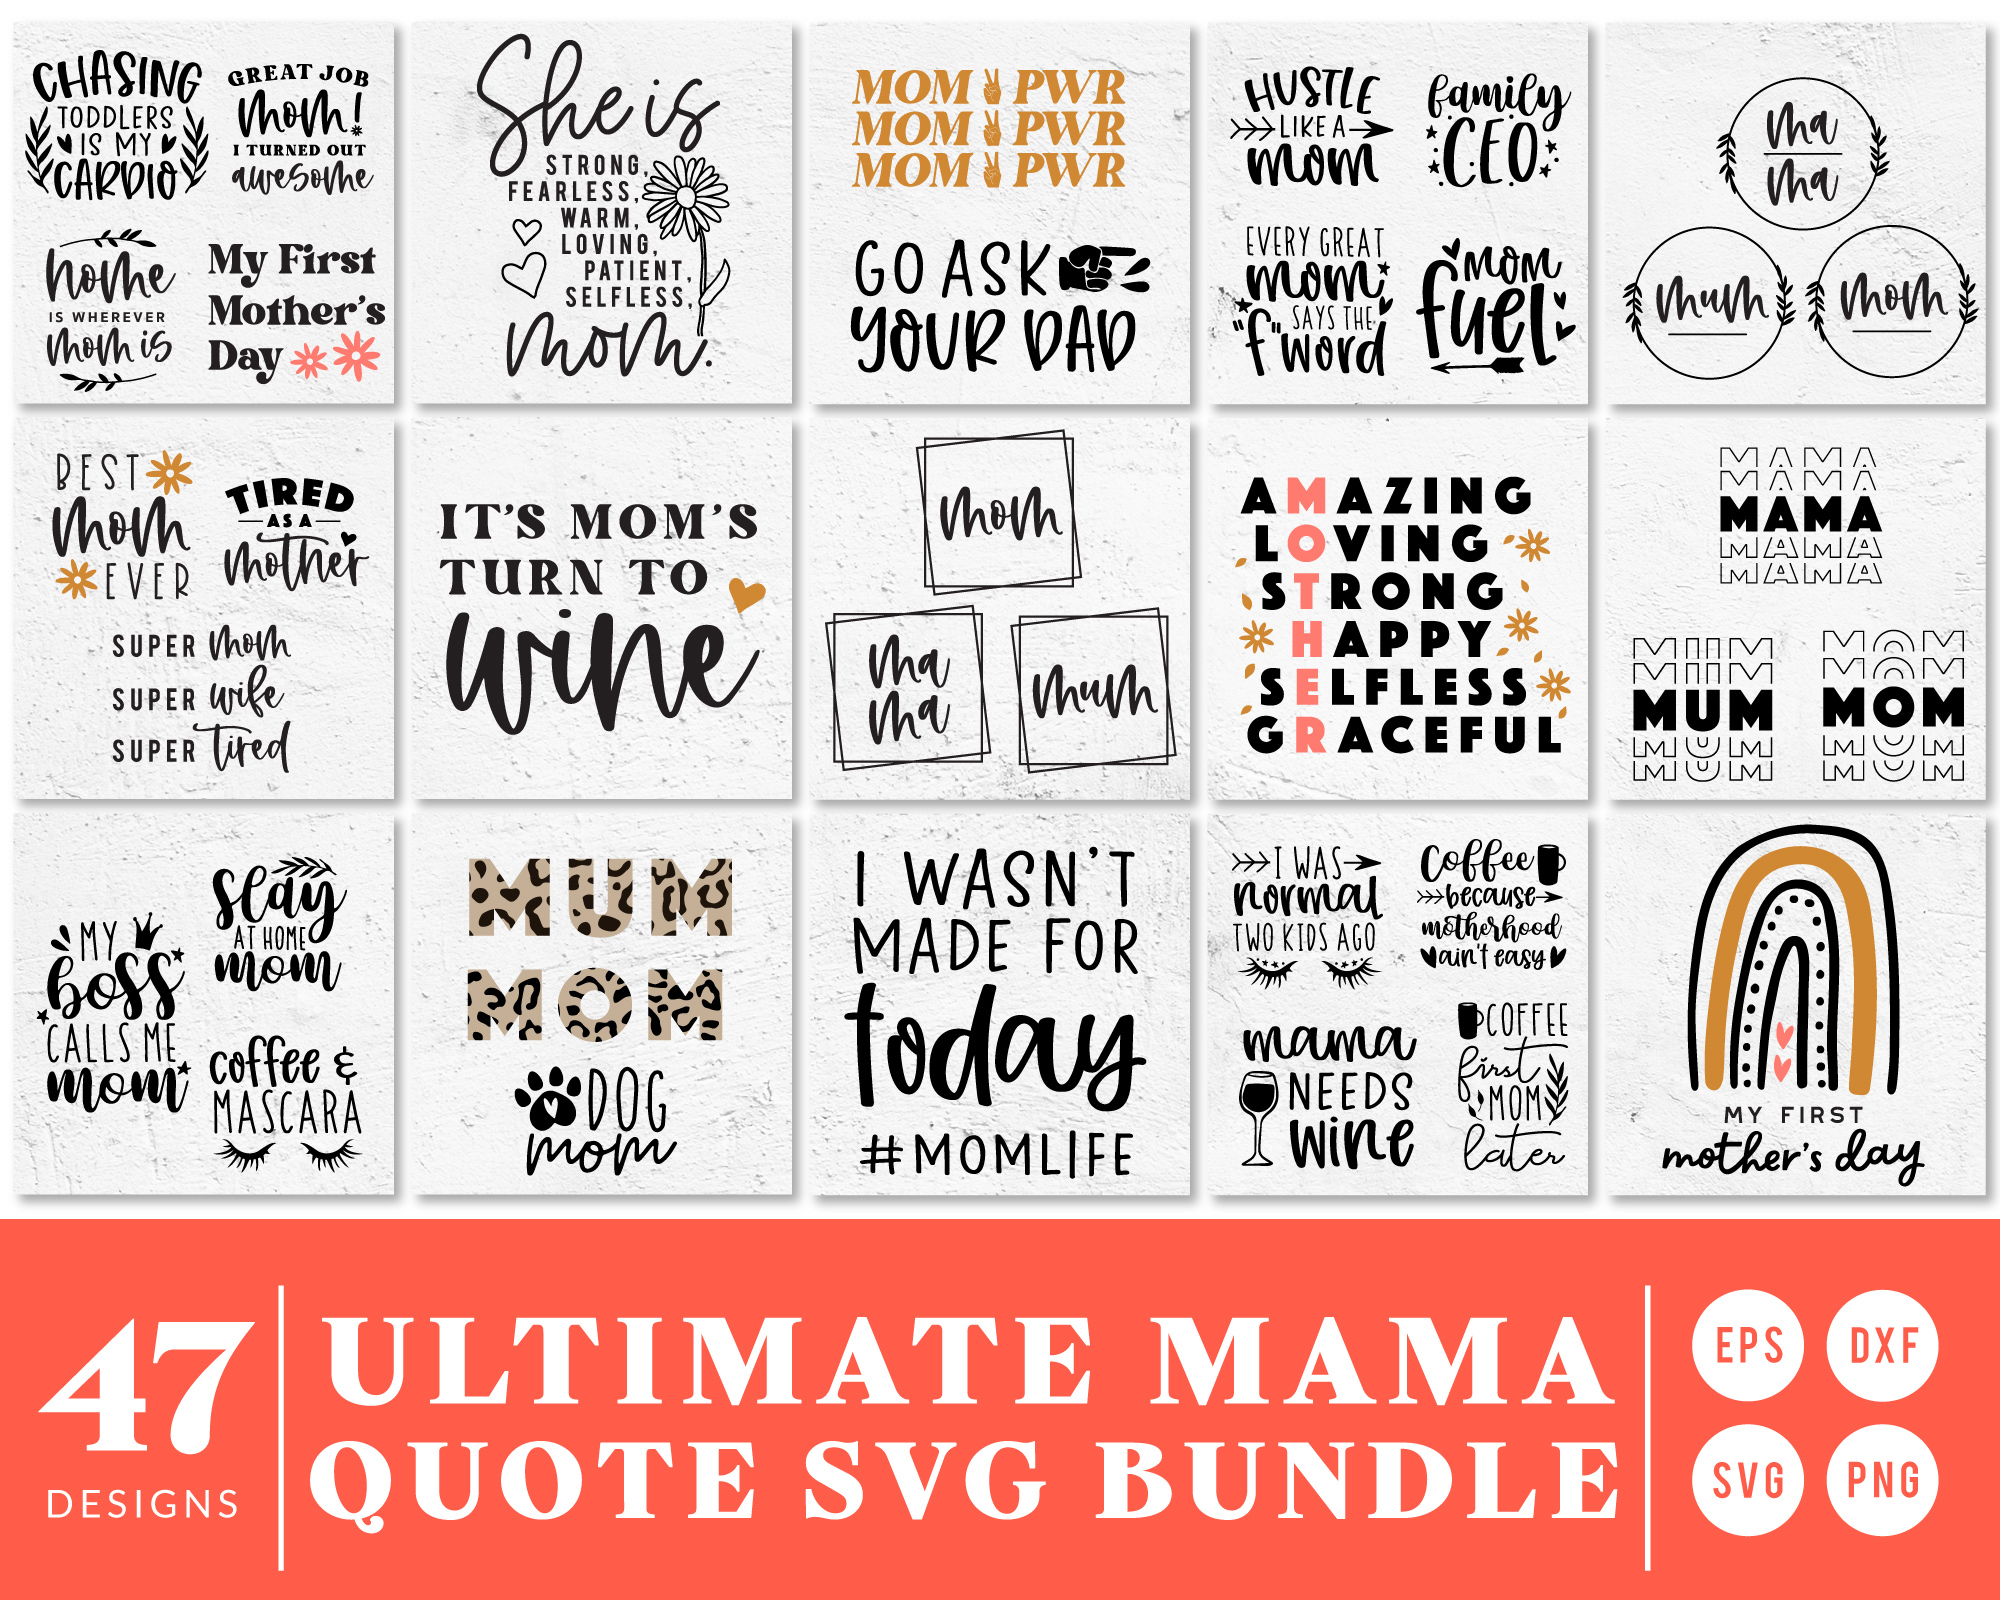 Mom Quote SVG Bundle